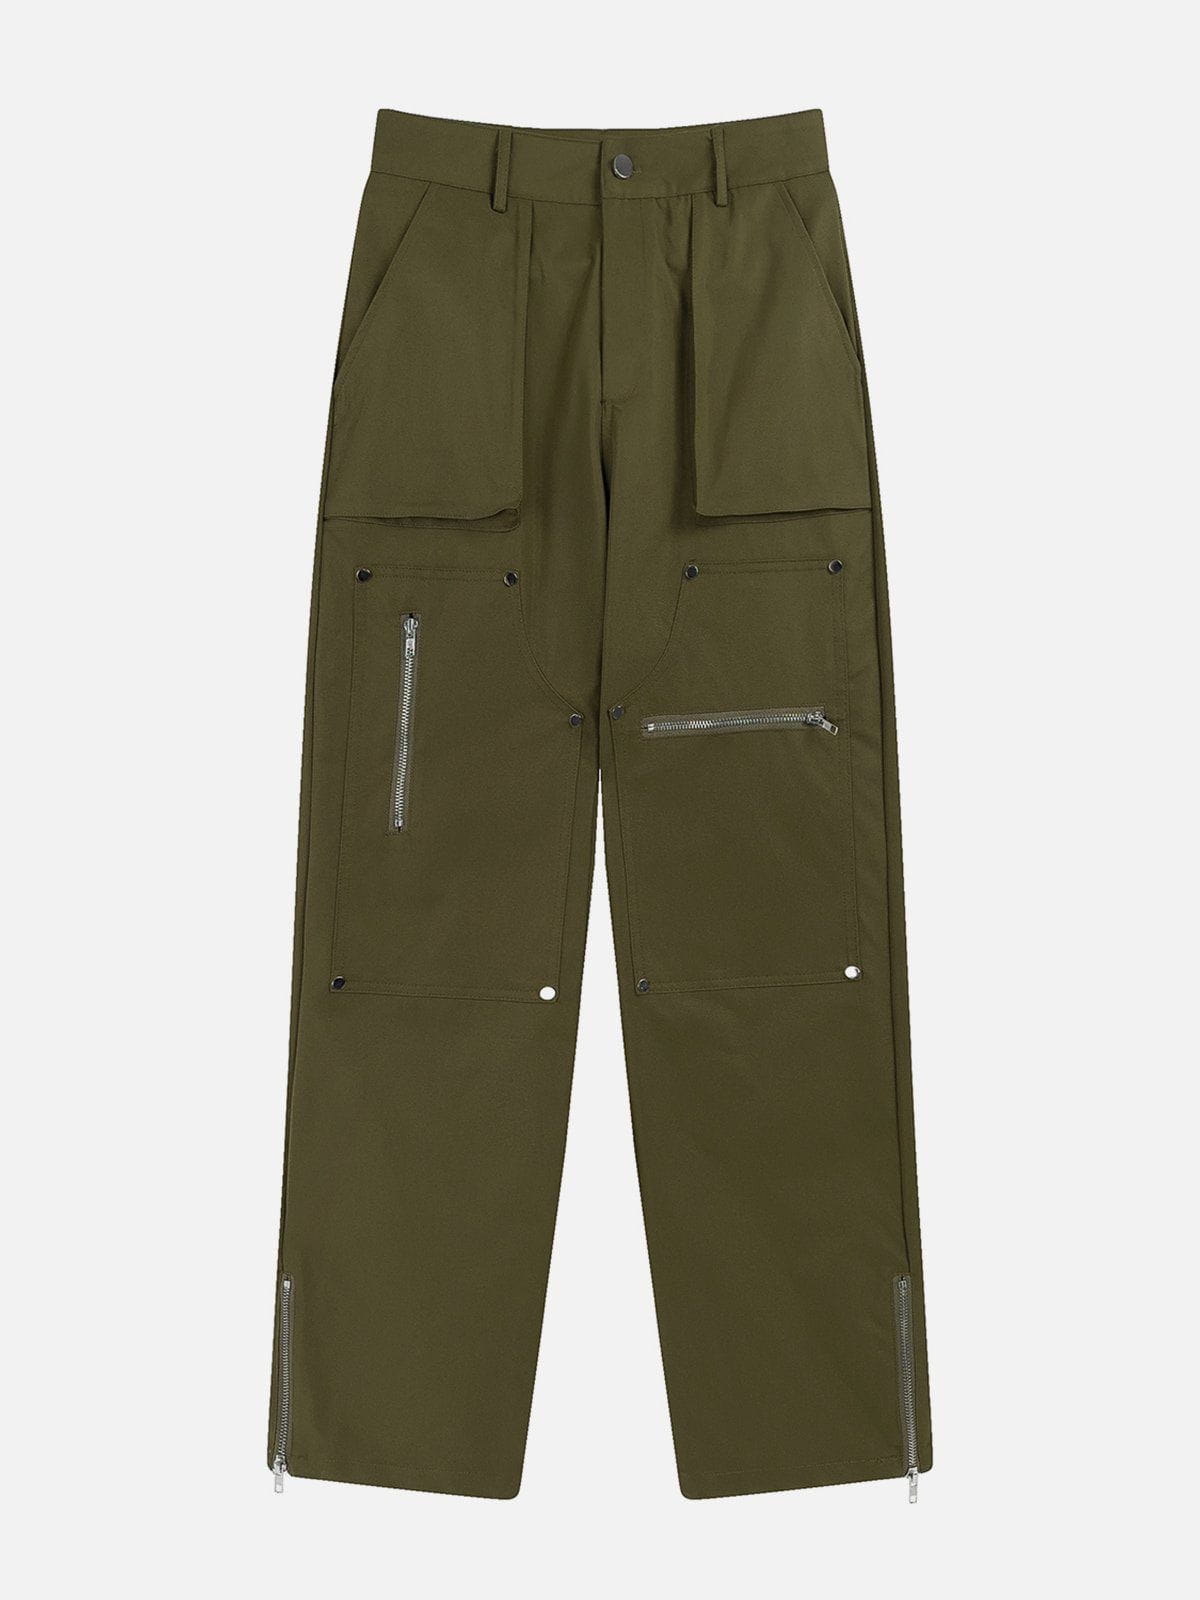 Sneakerland® - Multiple Pockets Zipper Cargo Pants